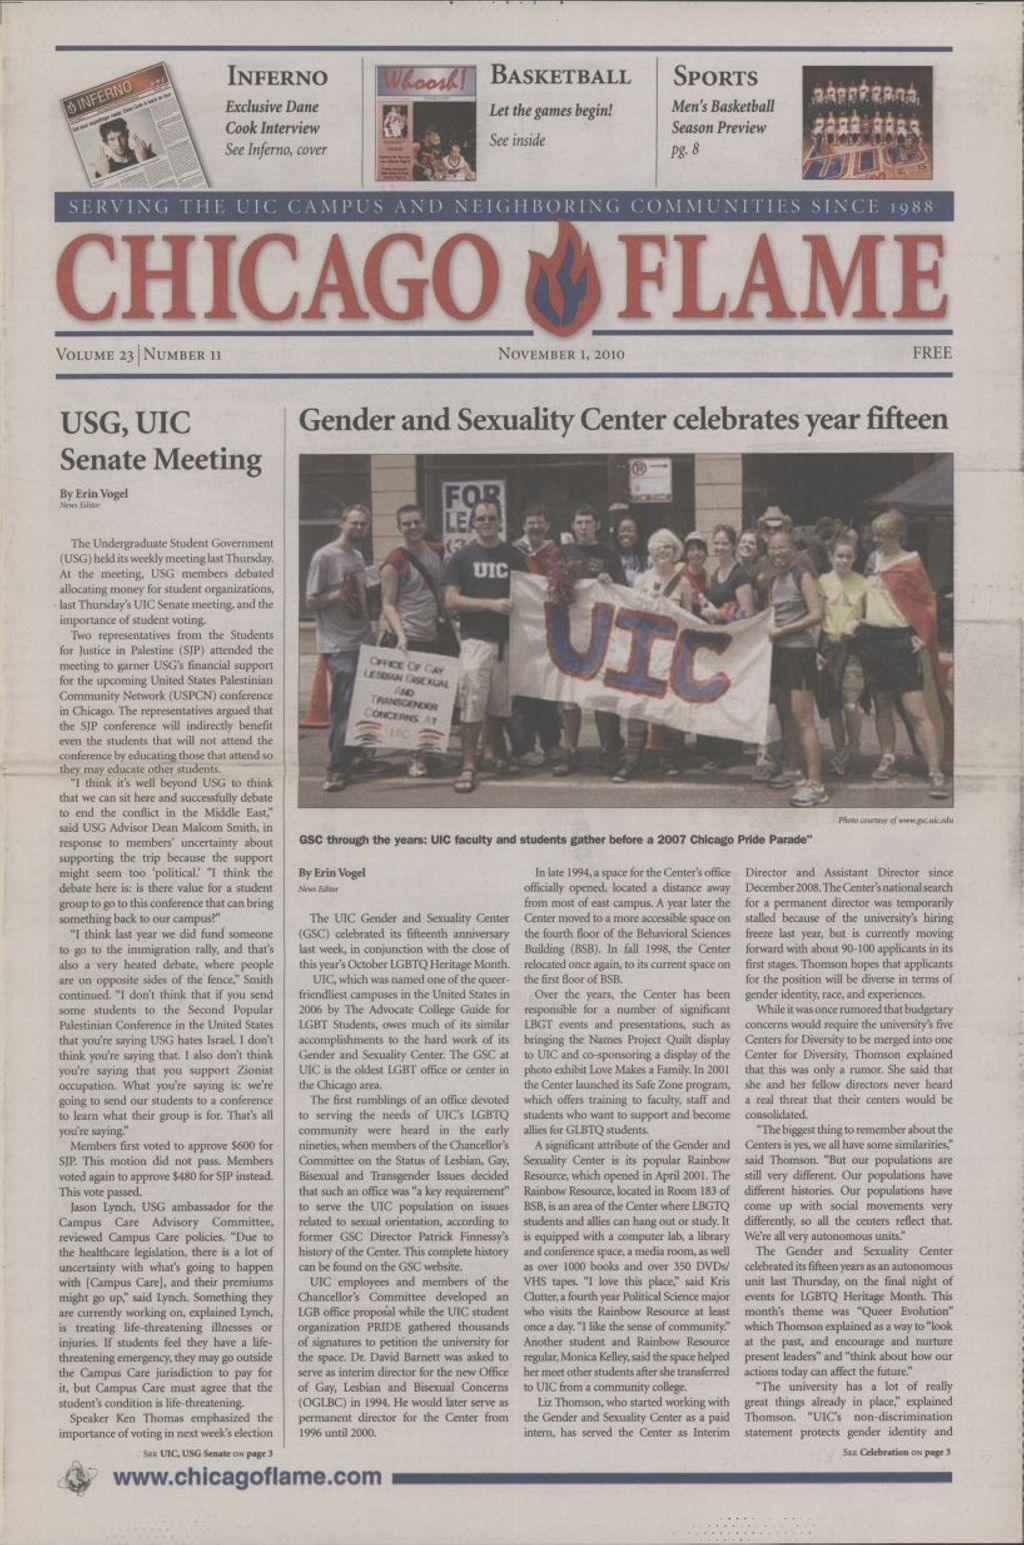 Miniature of Chicago Flame (November 1, 2010)